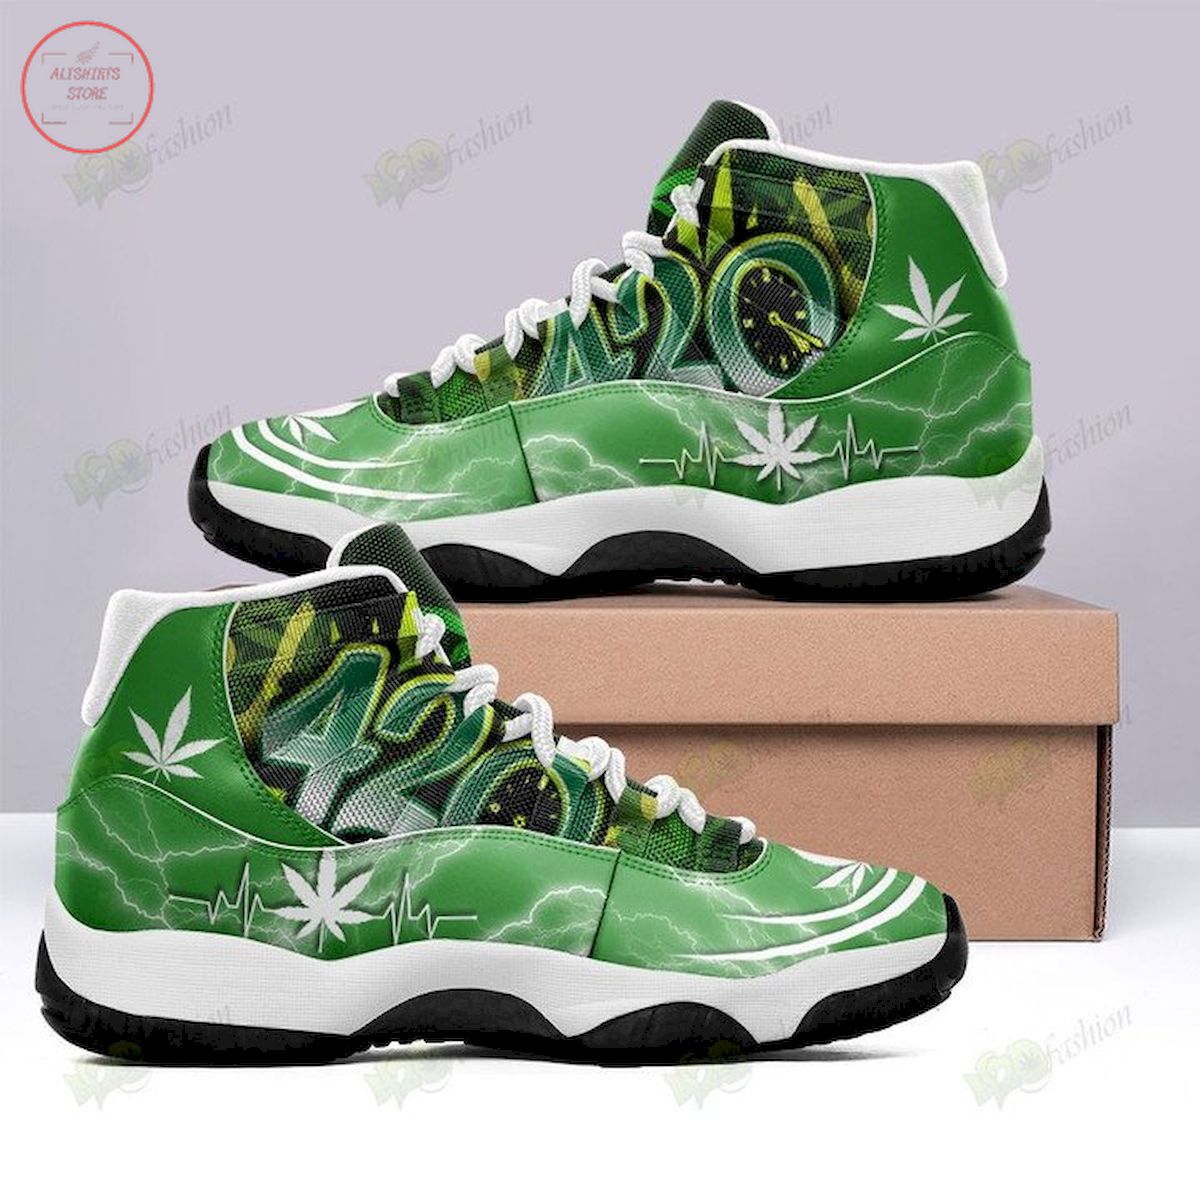 Cannabis 420 Air Jordan 11 Sneaker Shoes